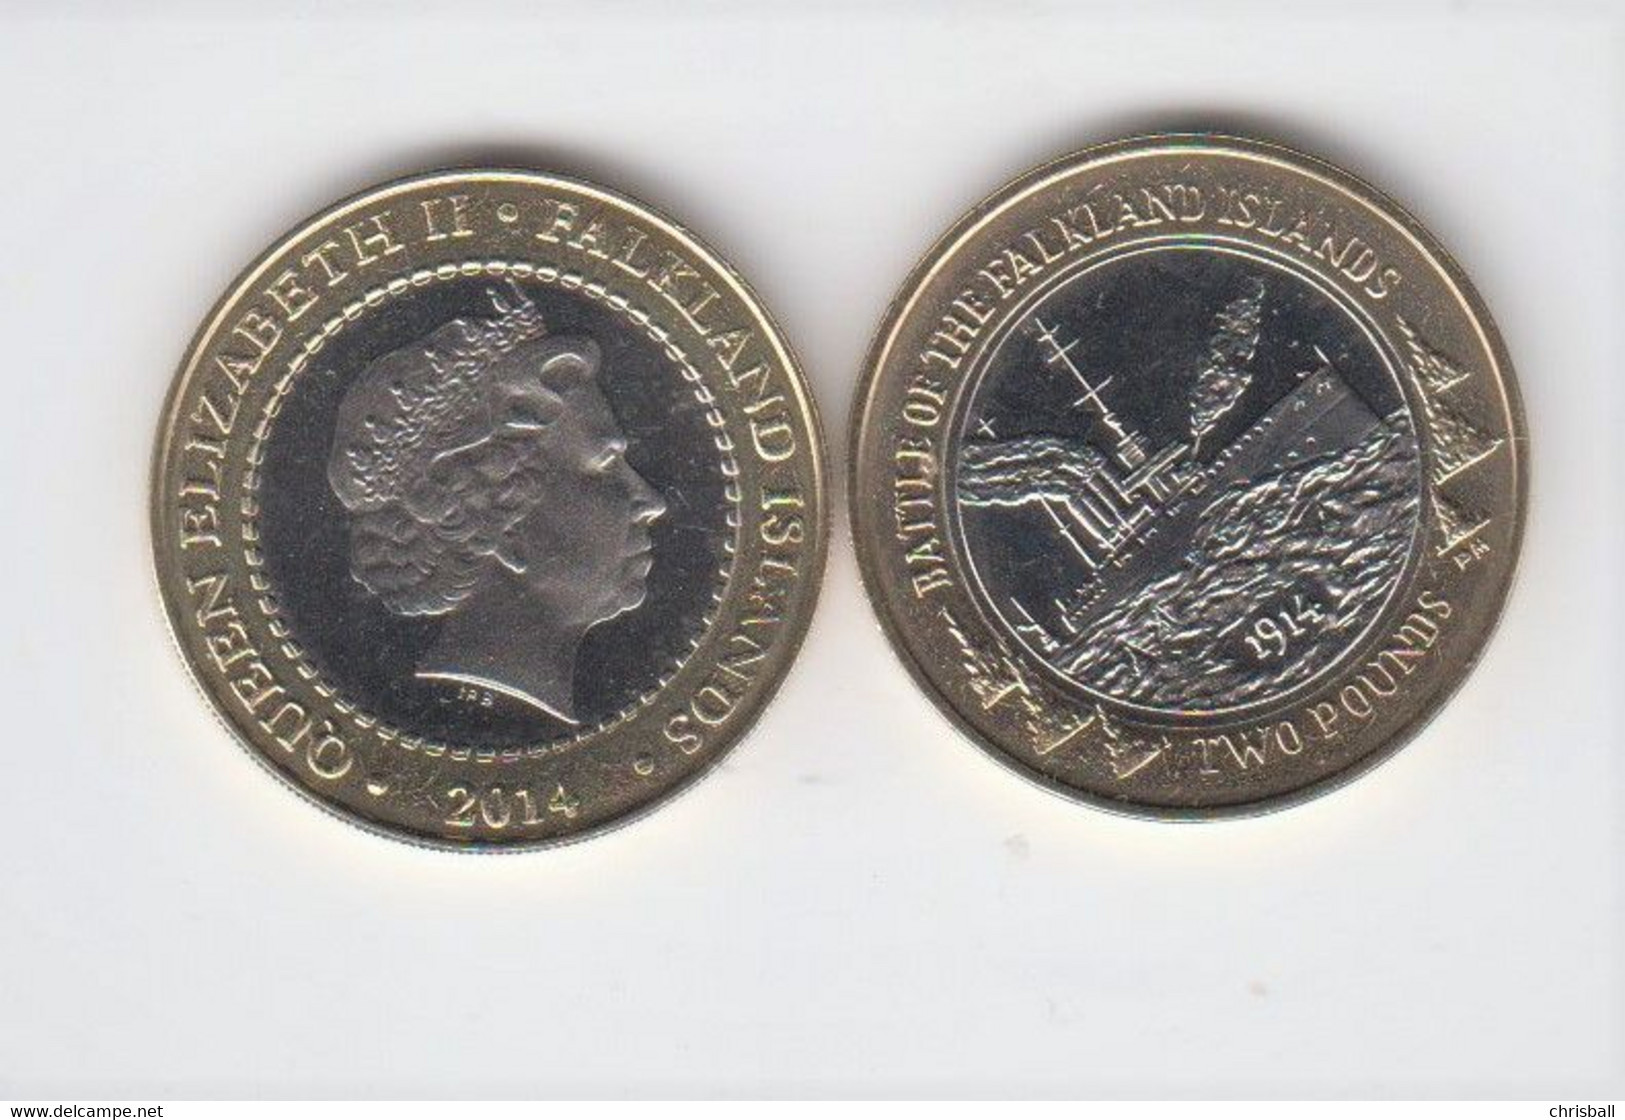 Falkland Island £2 Two Pound Coin - 2014 HMS Glasgow Uncirculated - Falkland Islands